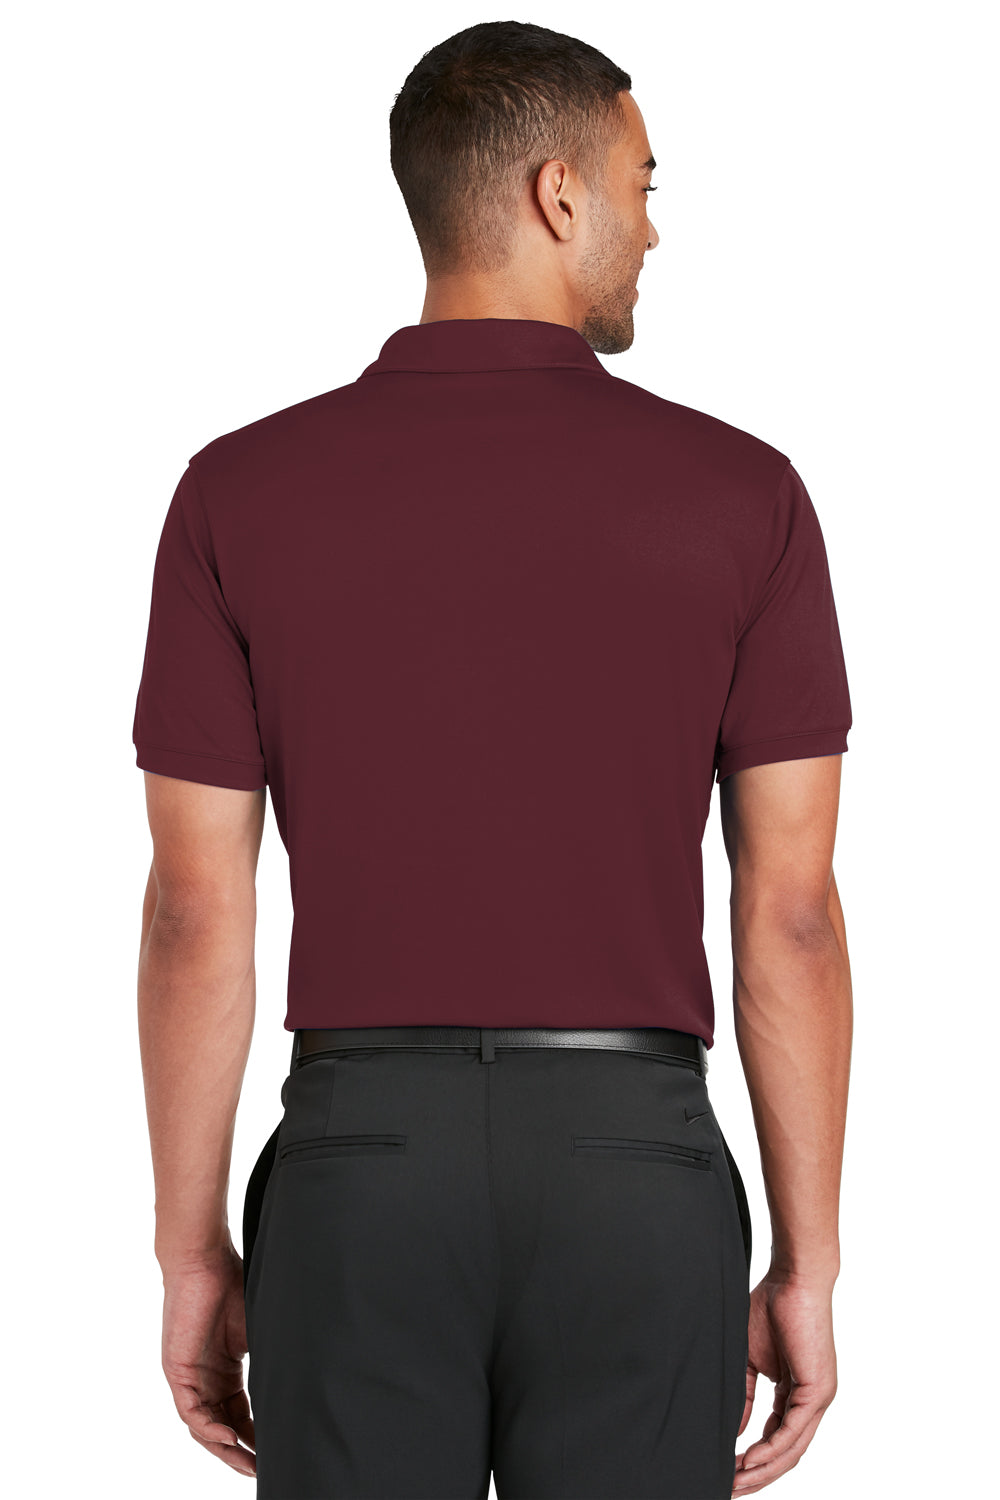 Nike 799802 Mens Players Dri-Fit Moisture Wicking Short Sleeve Polo Shirt Team Red Model Back